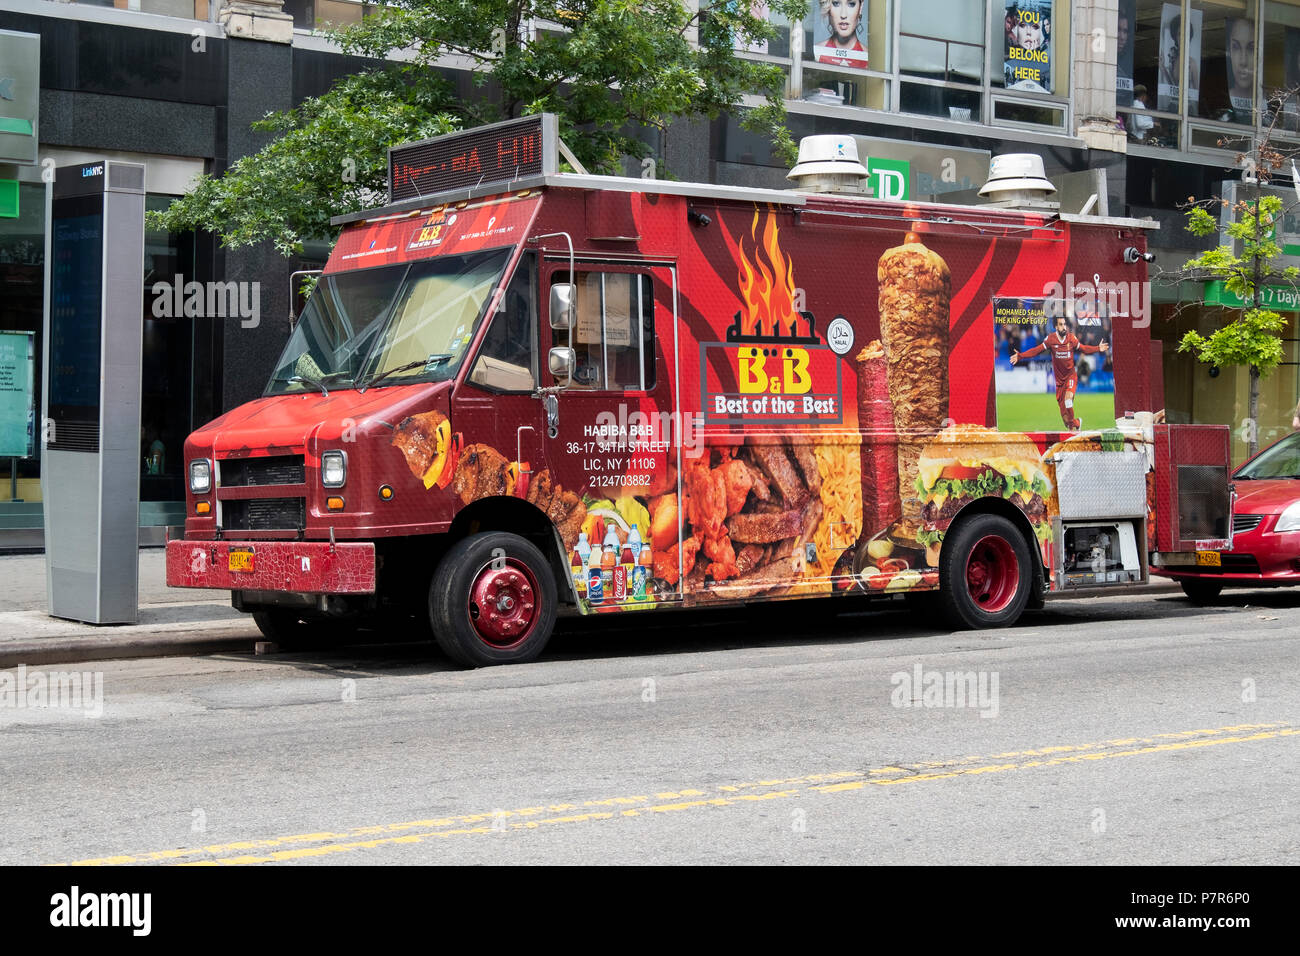 halal food truck